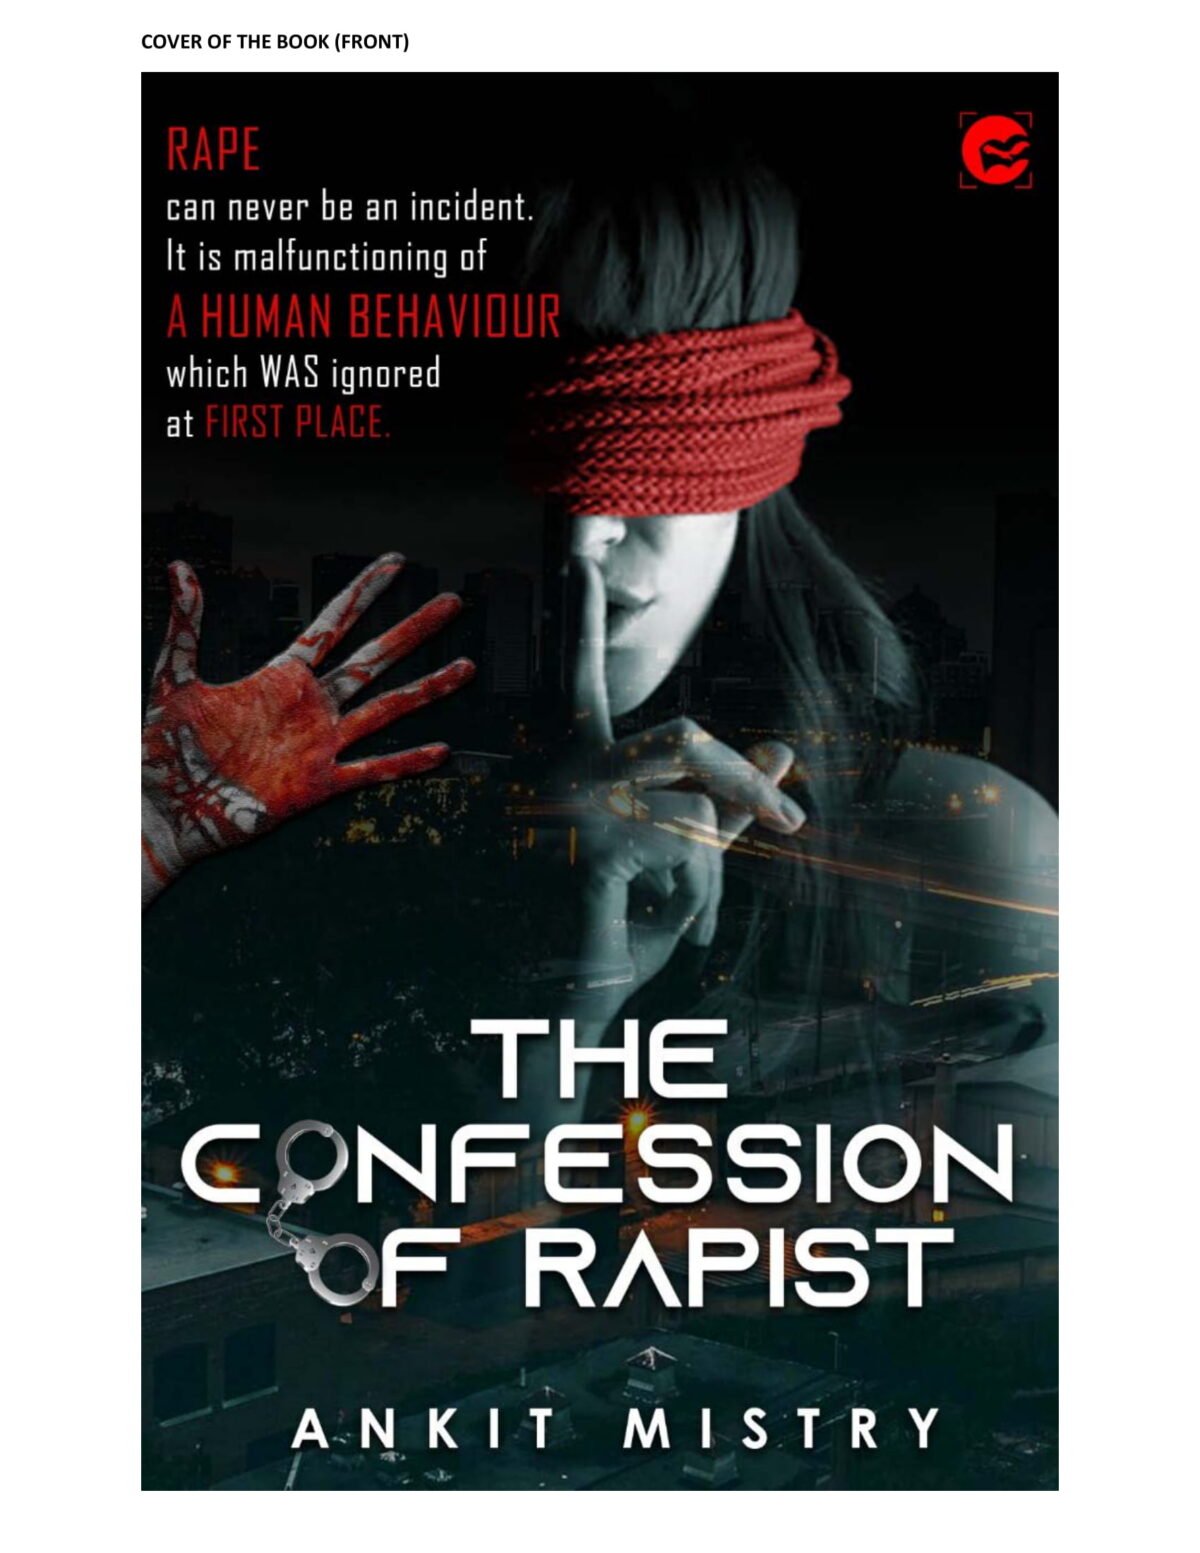 The confession of rapist